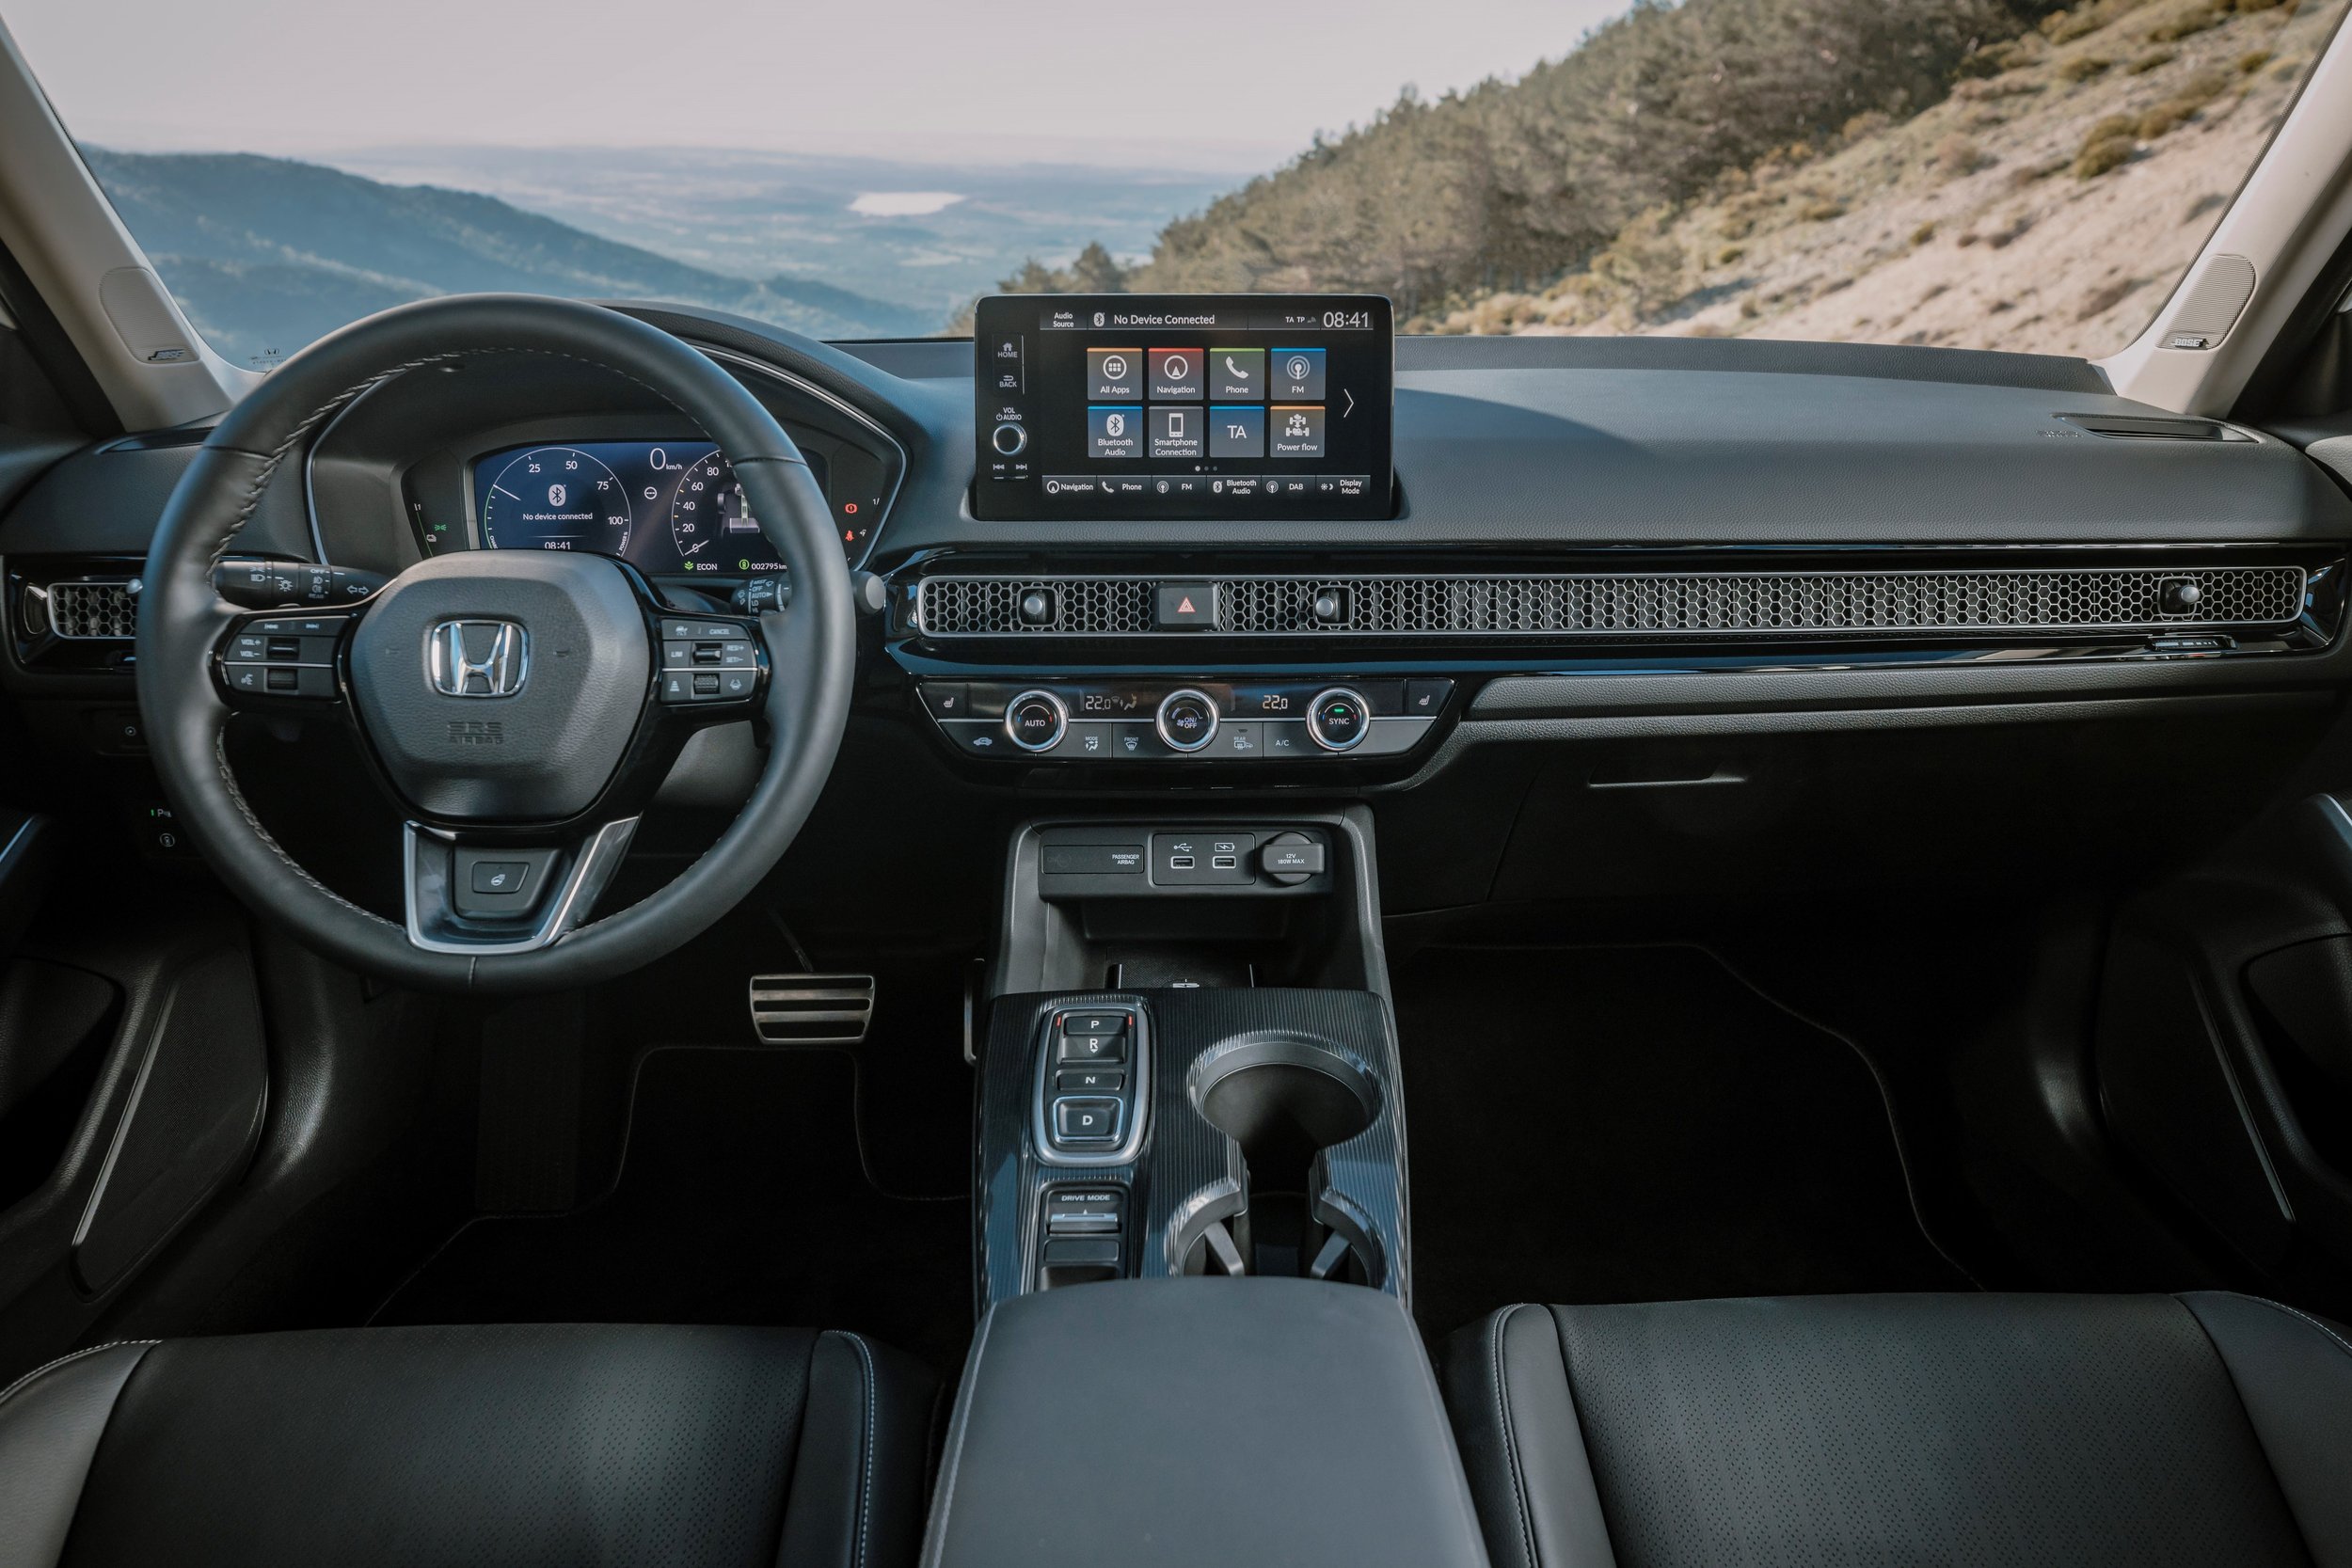 New Honda Civic beige interiors  MotorBashcom